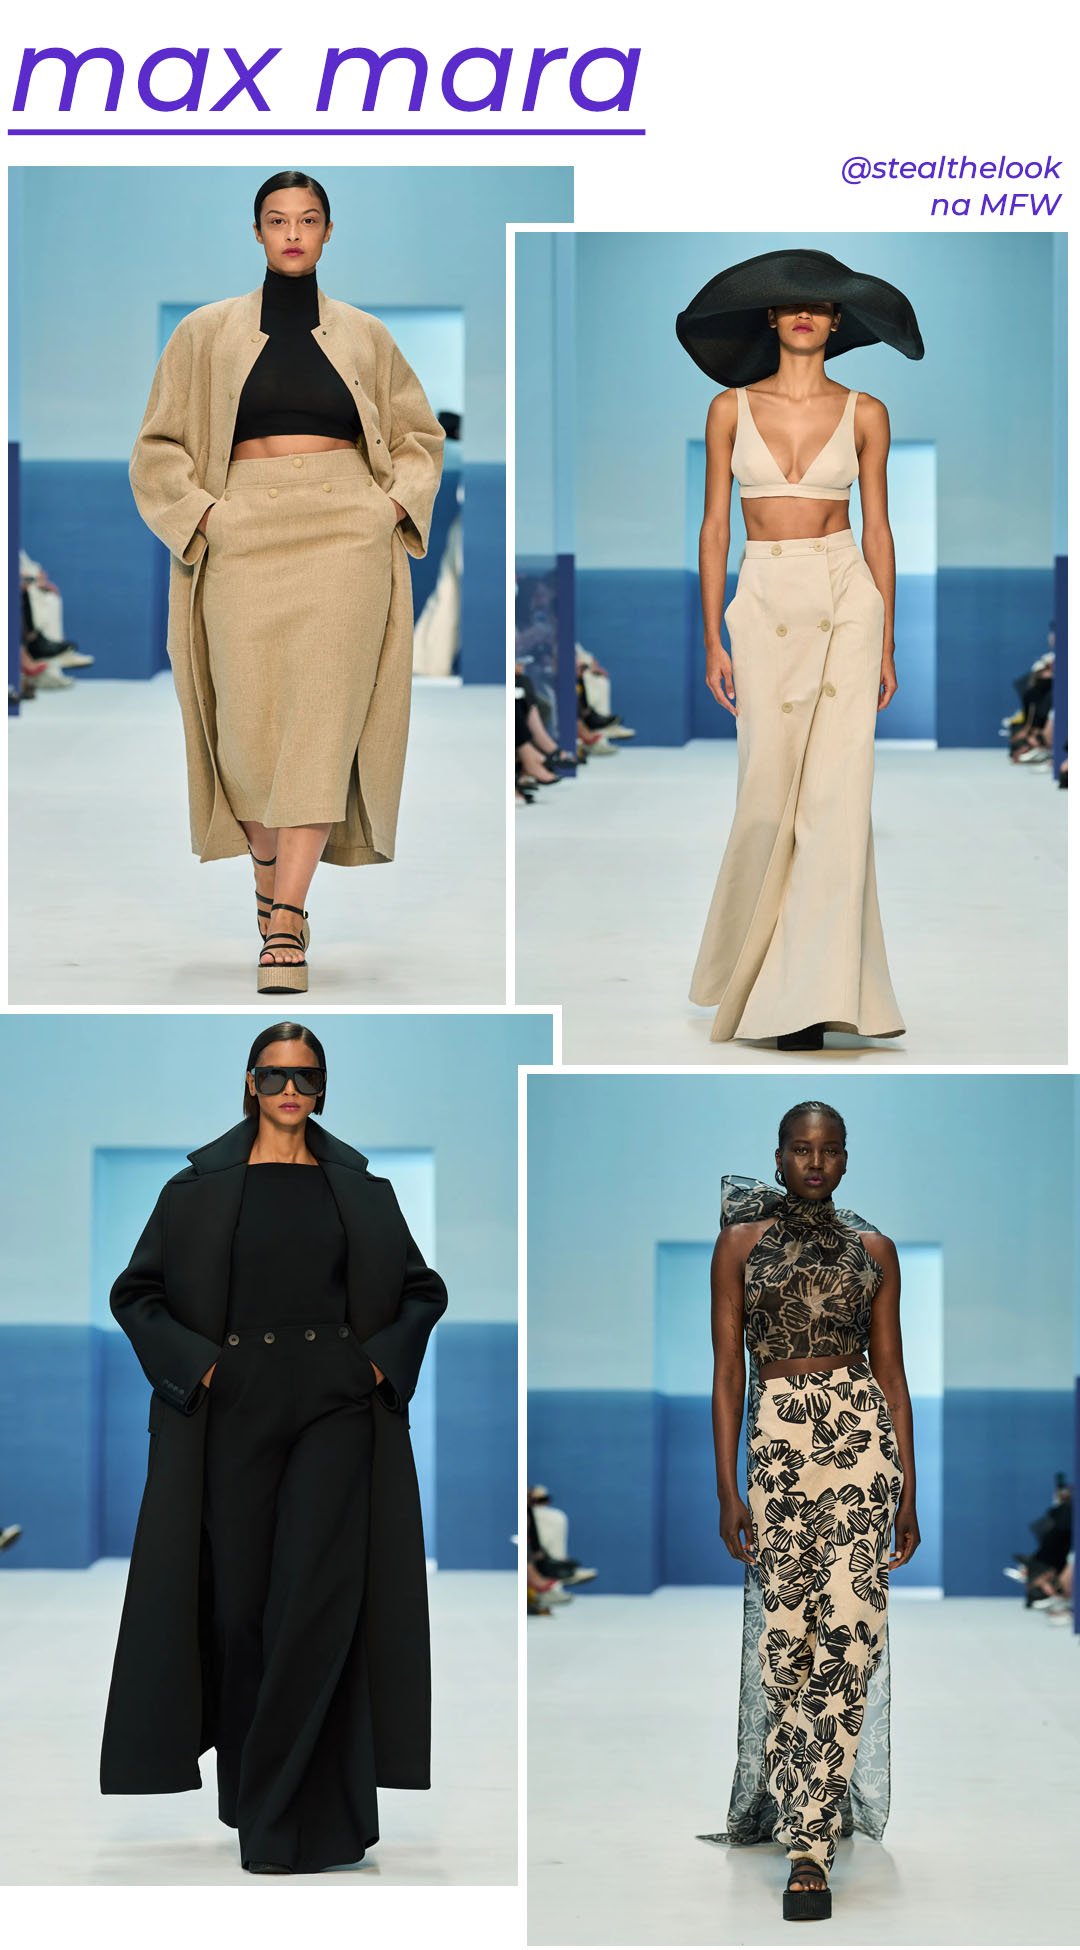 Max Mara S/S 2023 - roupas diversas - Milano Fashion Week - Primavera - modelo andando pela passarela - https://stealthelook.com.br